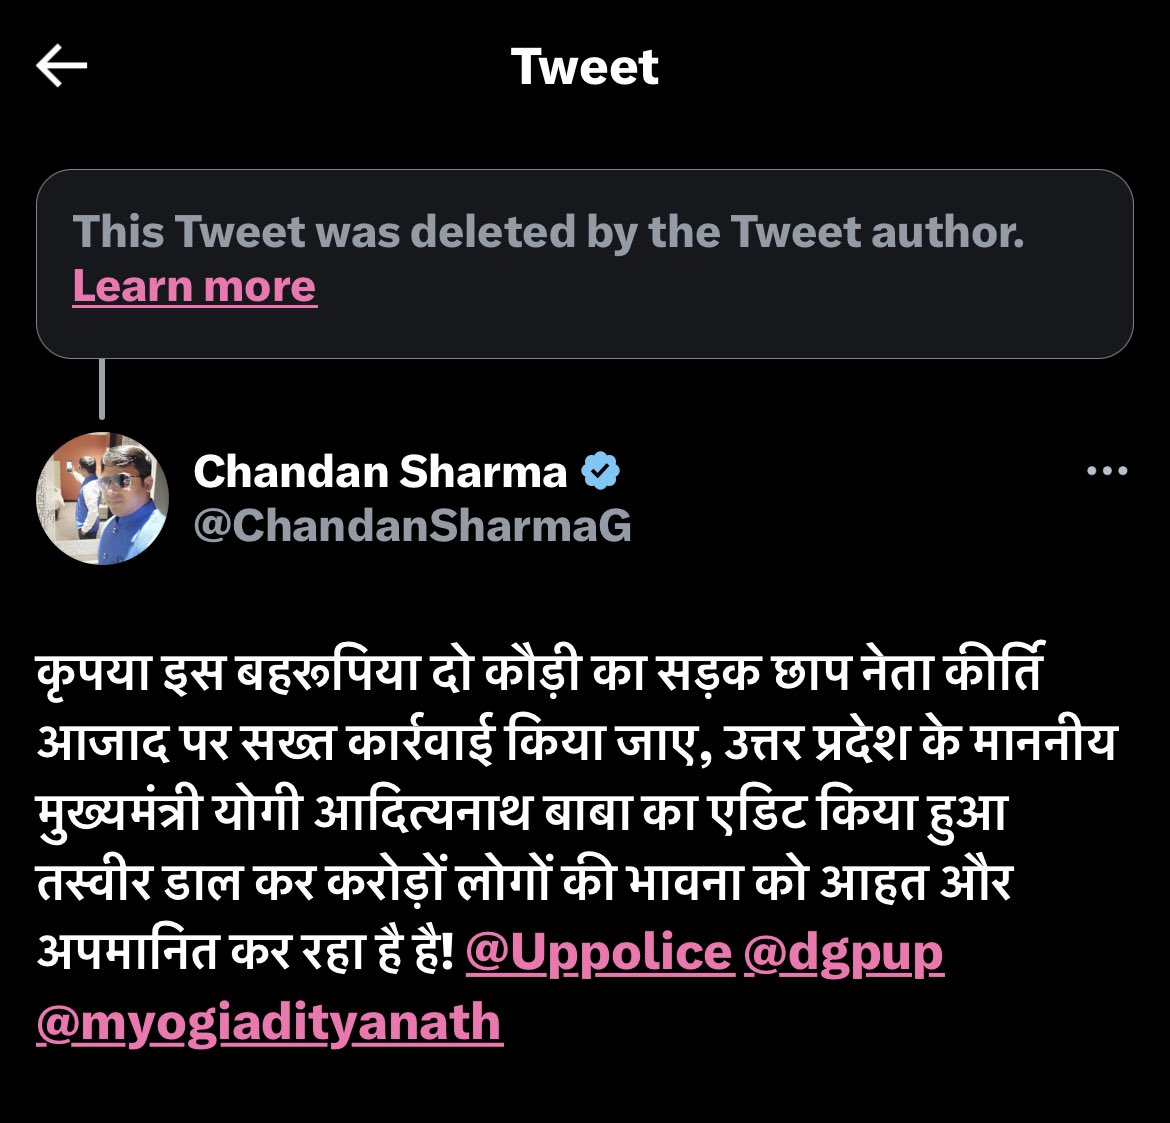 ChandanSharmaG tweet picture